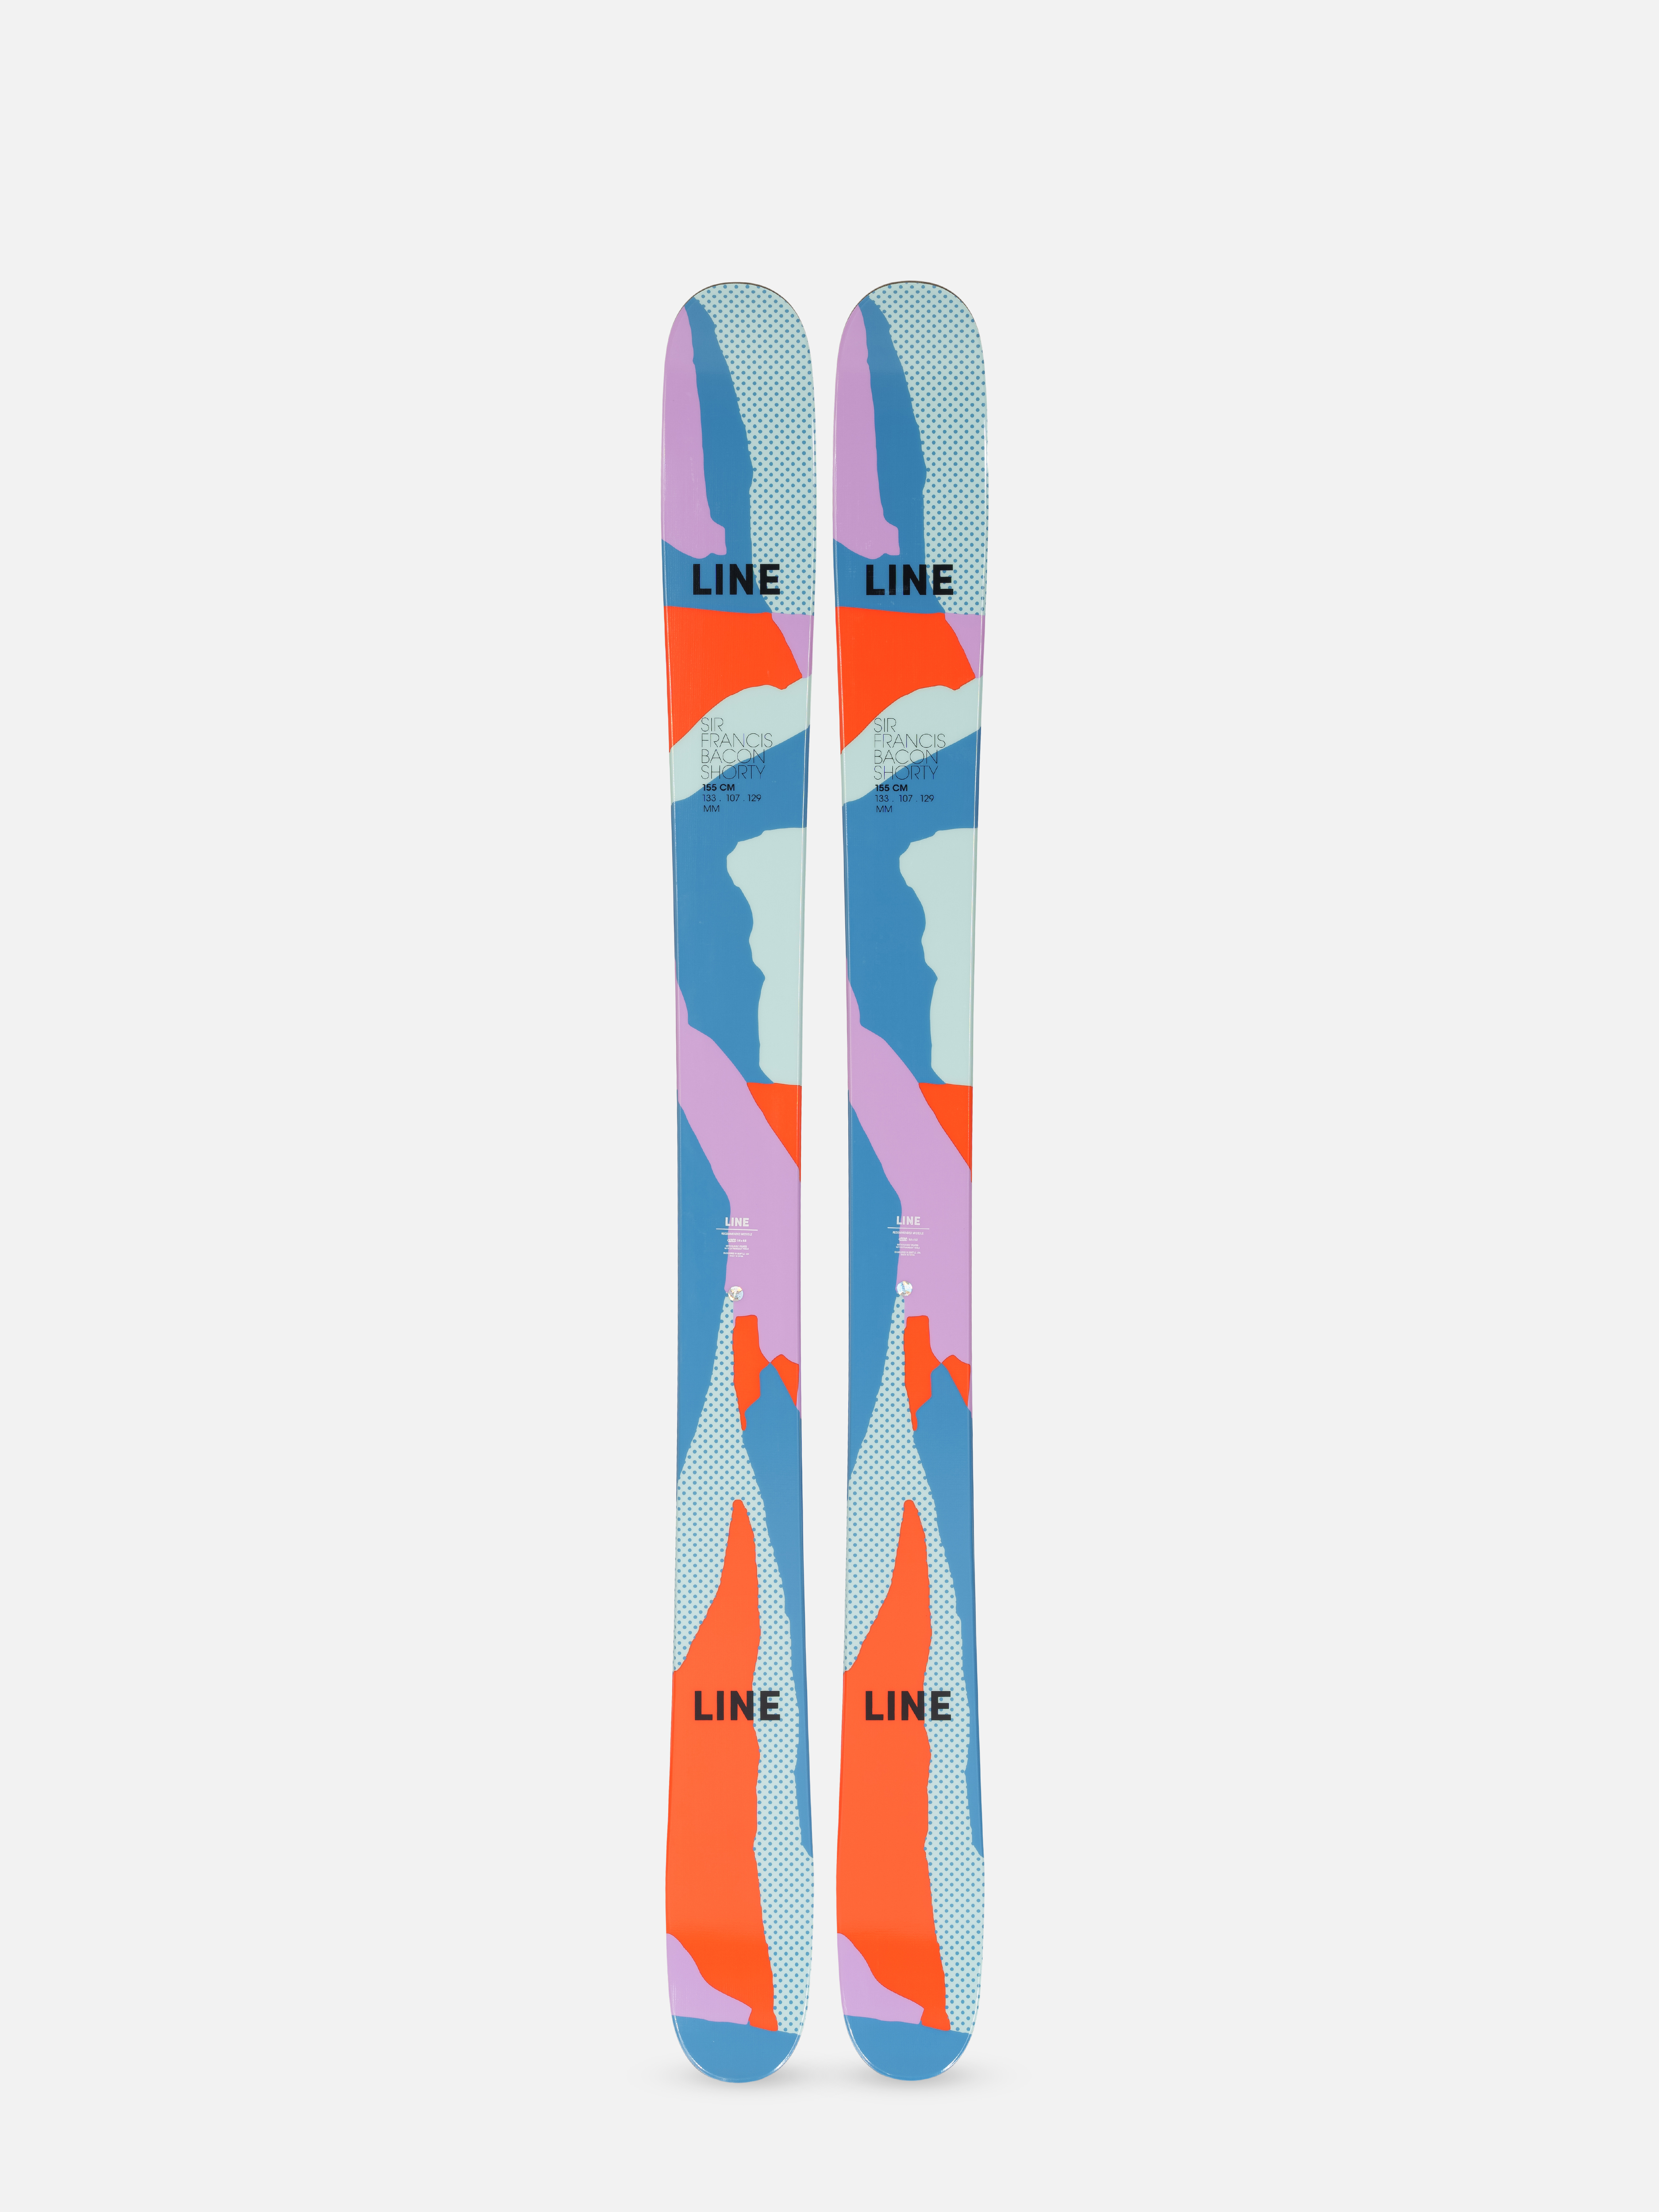 LINE Skis / Sir Francis Bacon Shorty